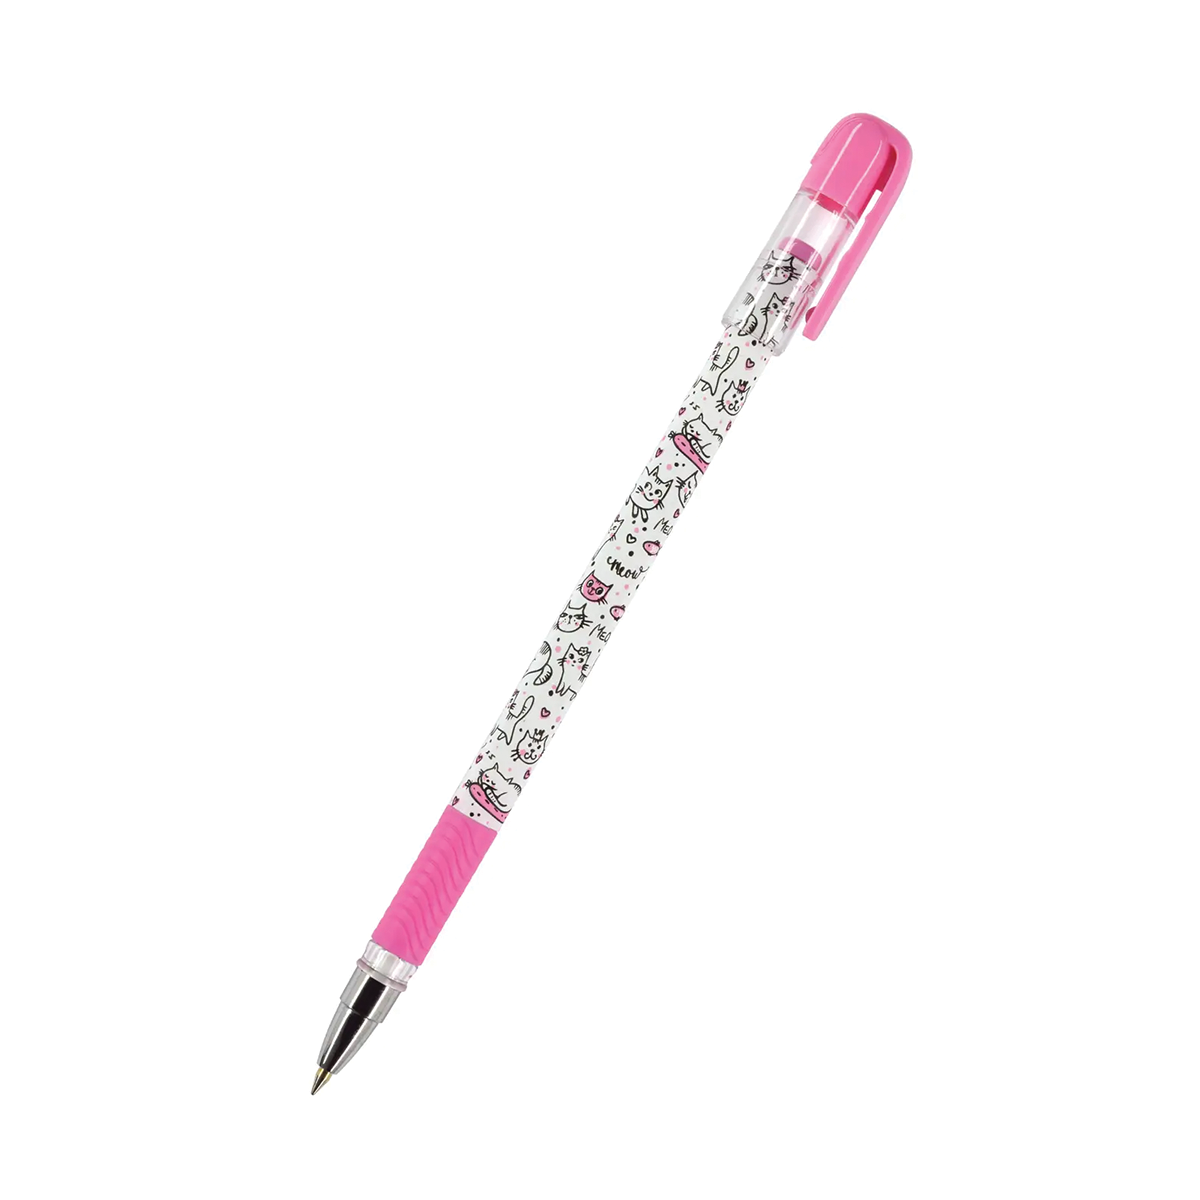 MagicWrite Ballpoint Pen, Pink Kitten, 0.5mm, Image 1